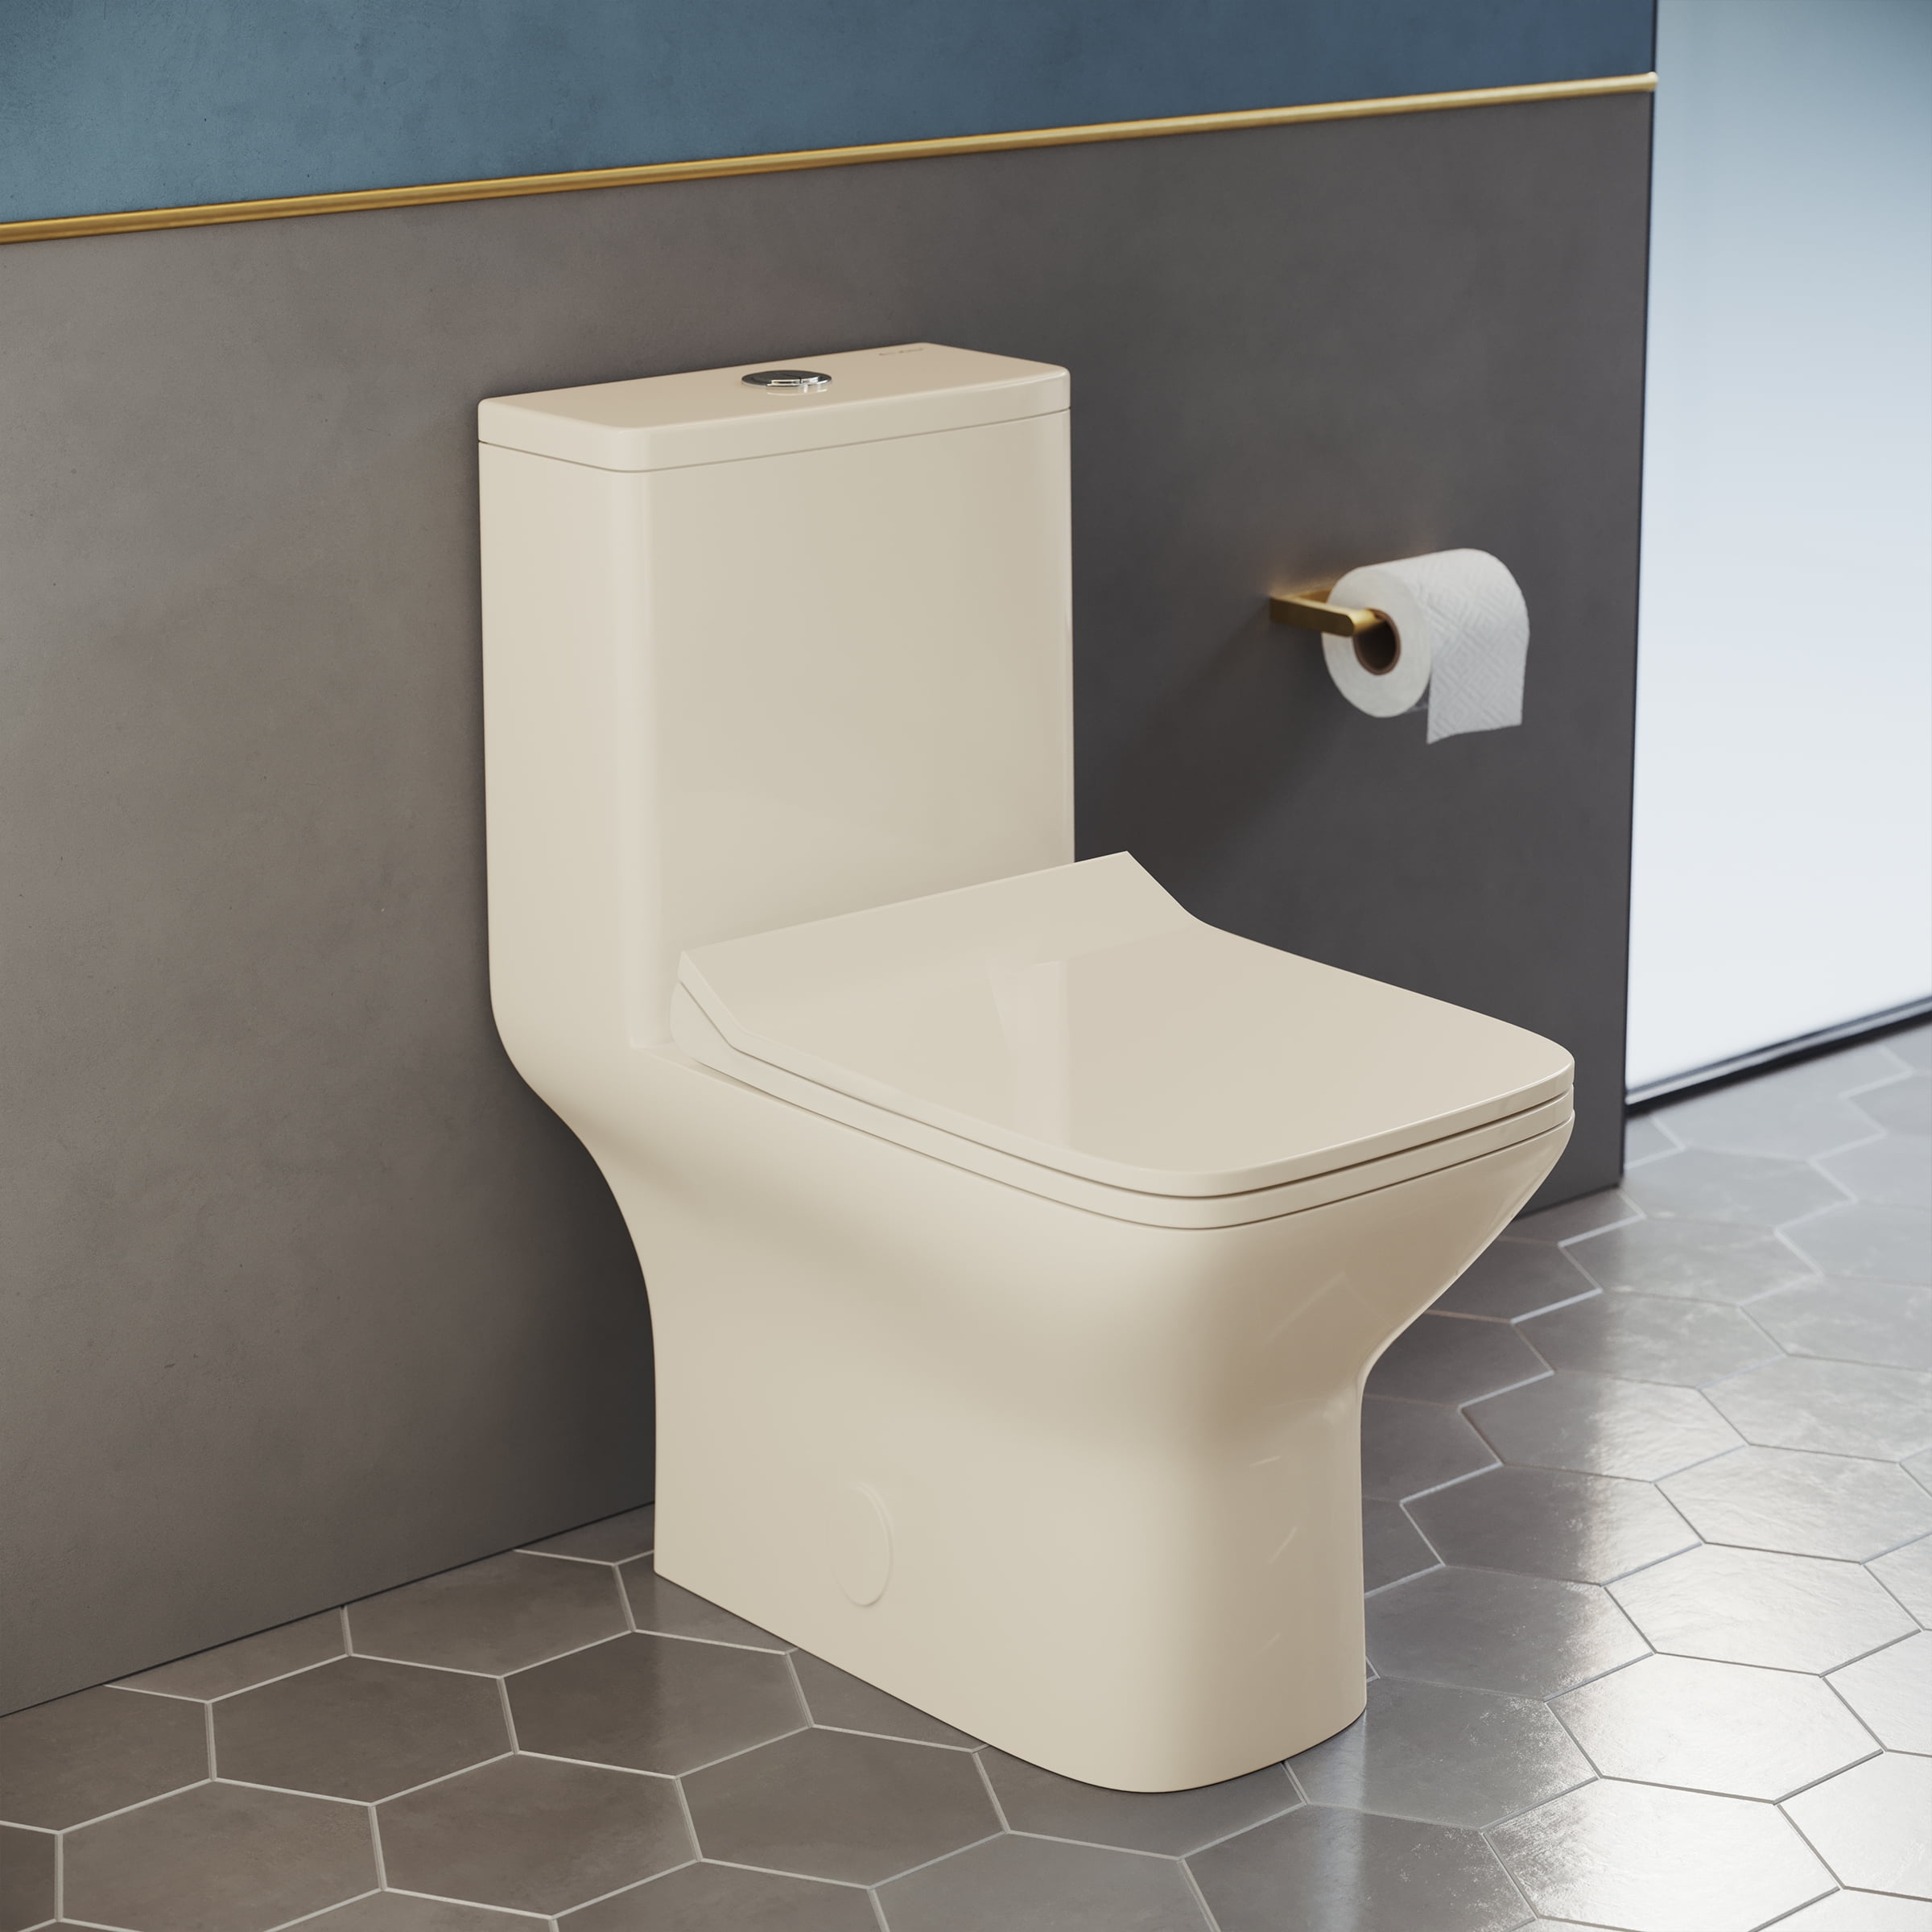 Round Rimless Close Coupled Toilet Free Soft Closing Seat Antibacterial Design 